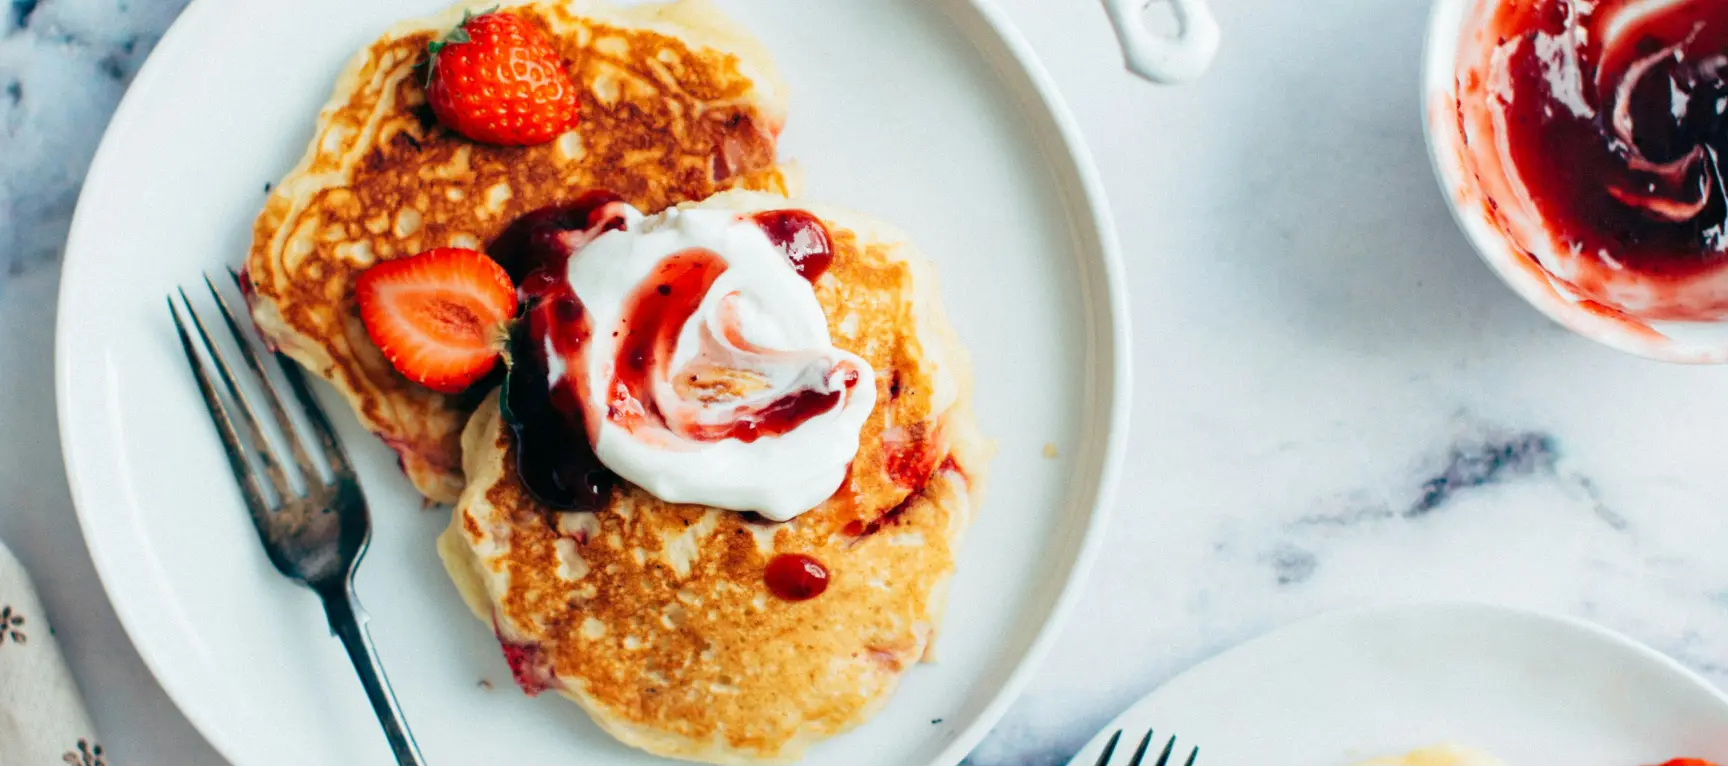 Pancakes with strawberries, jam and quark